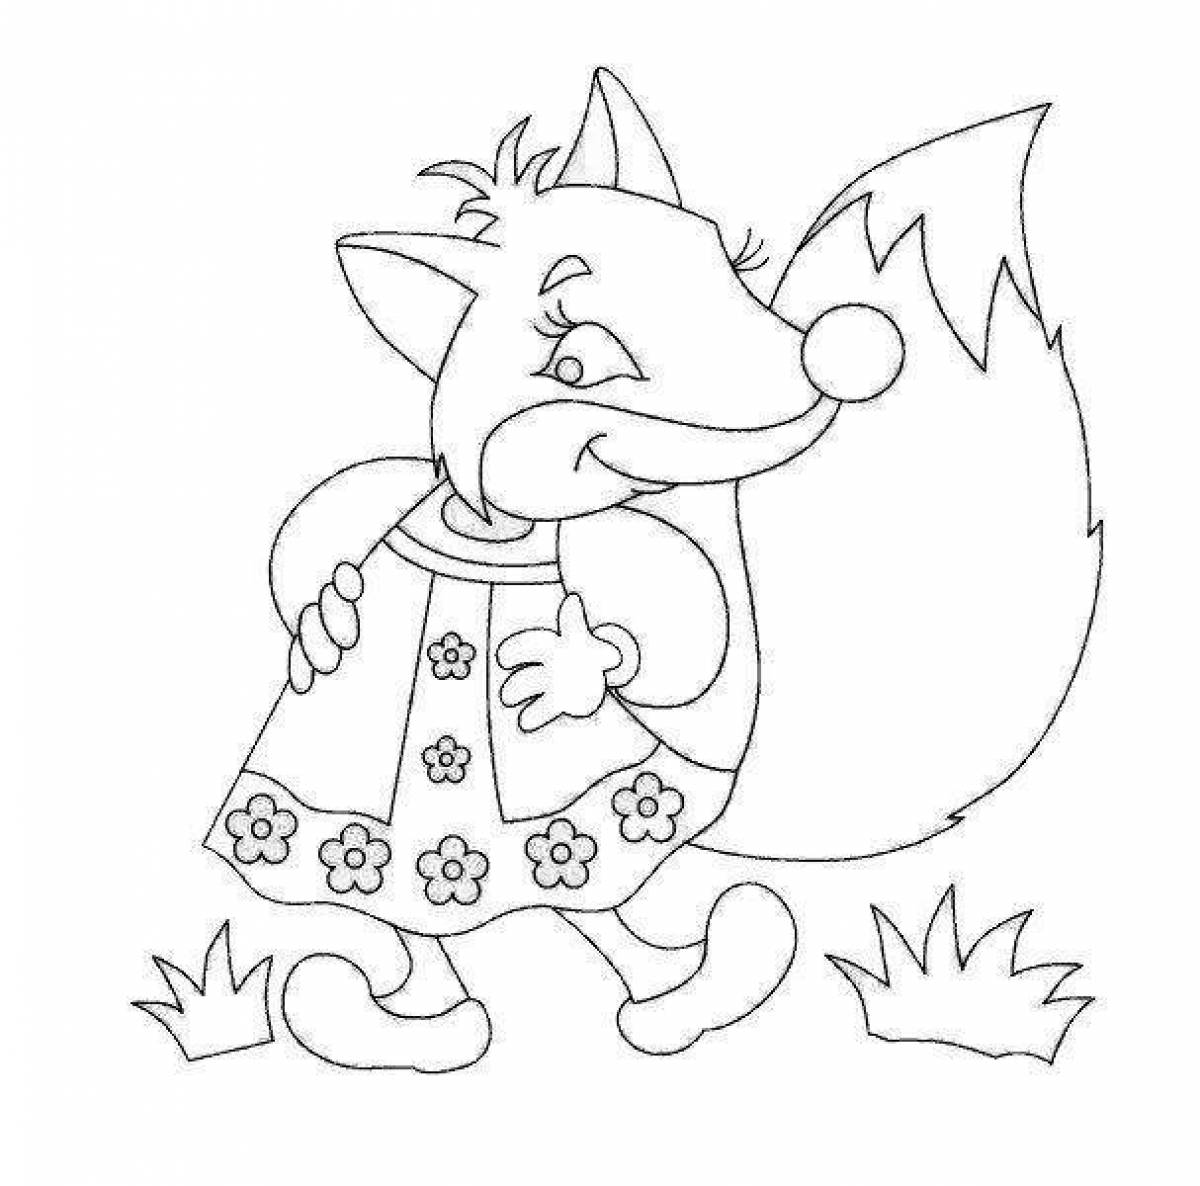 Fun fox and rabbit coloring book